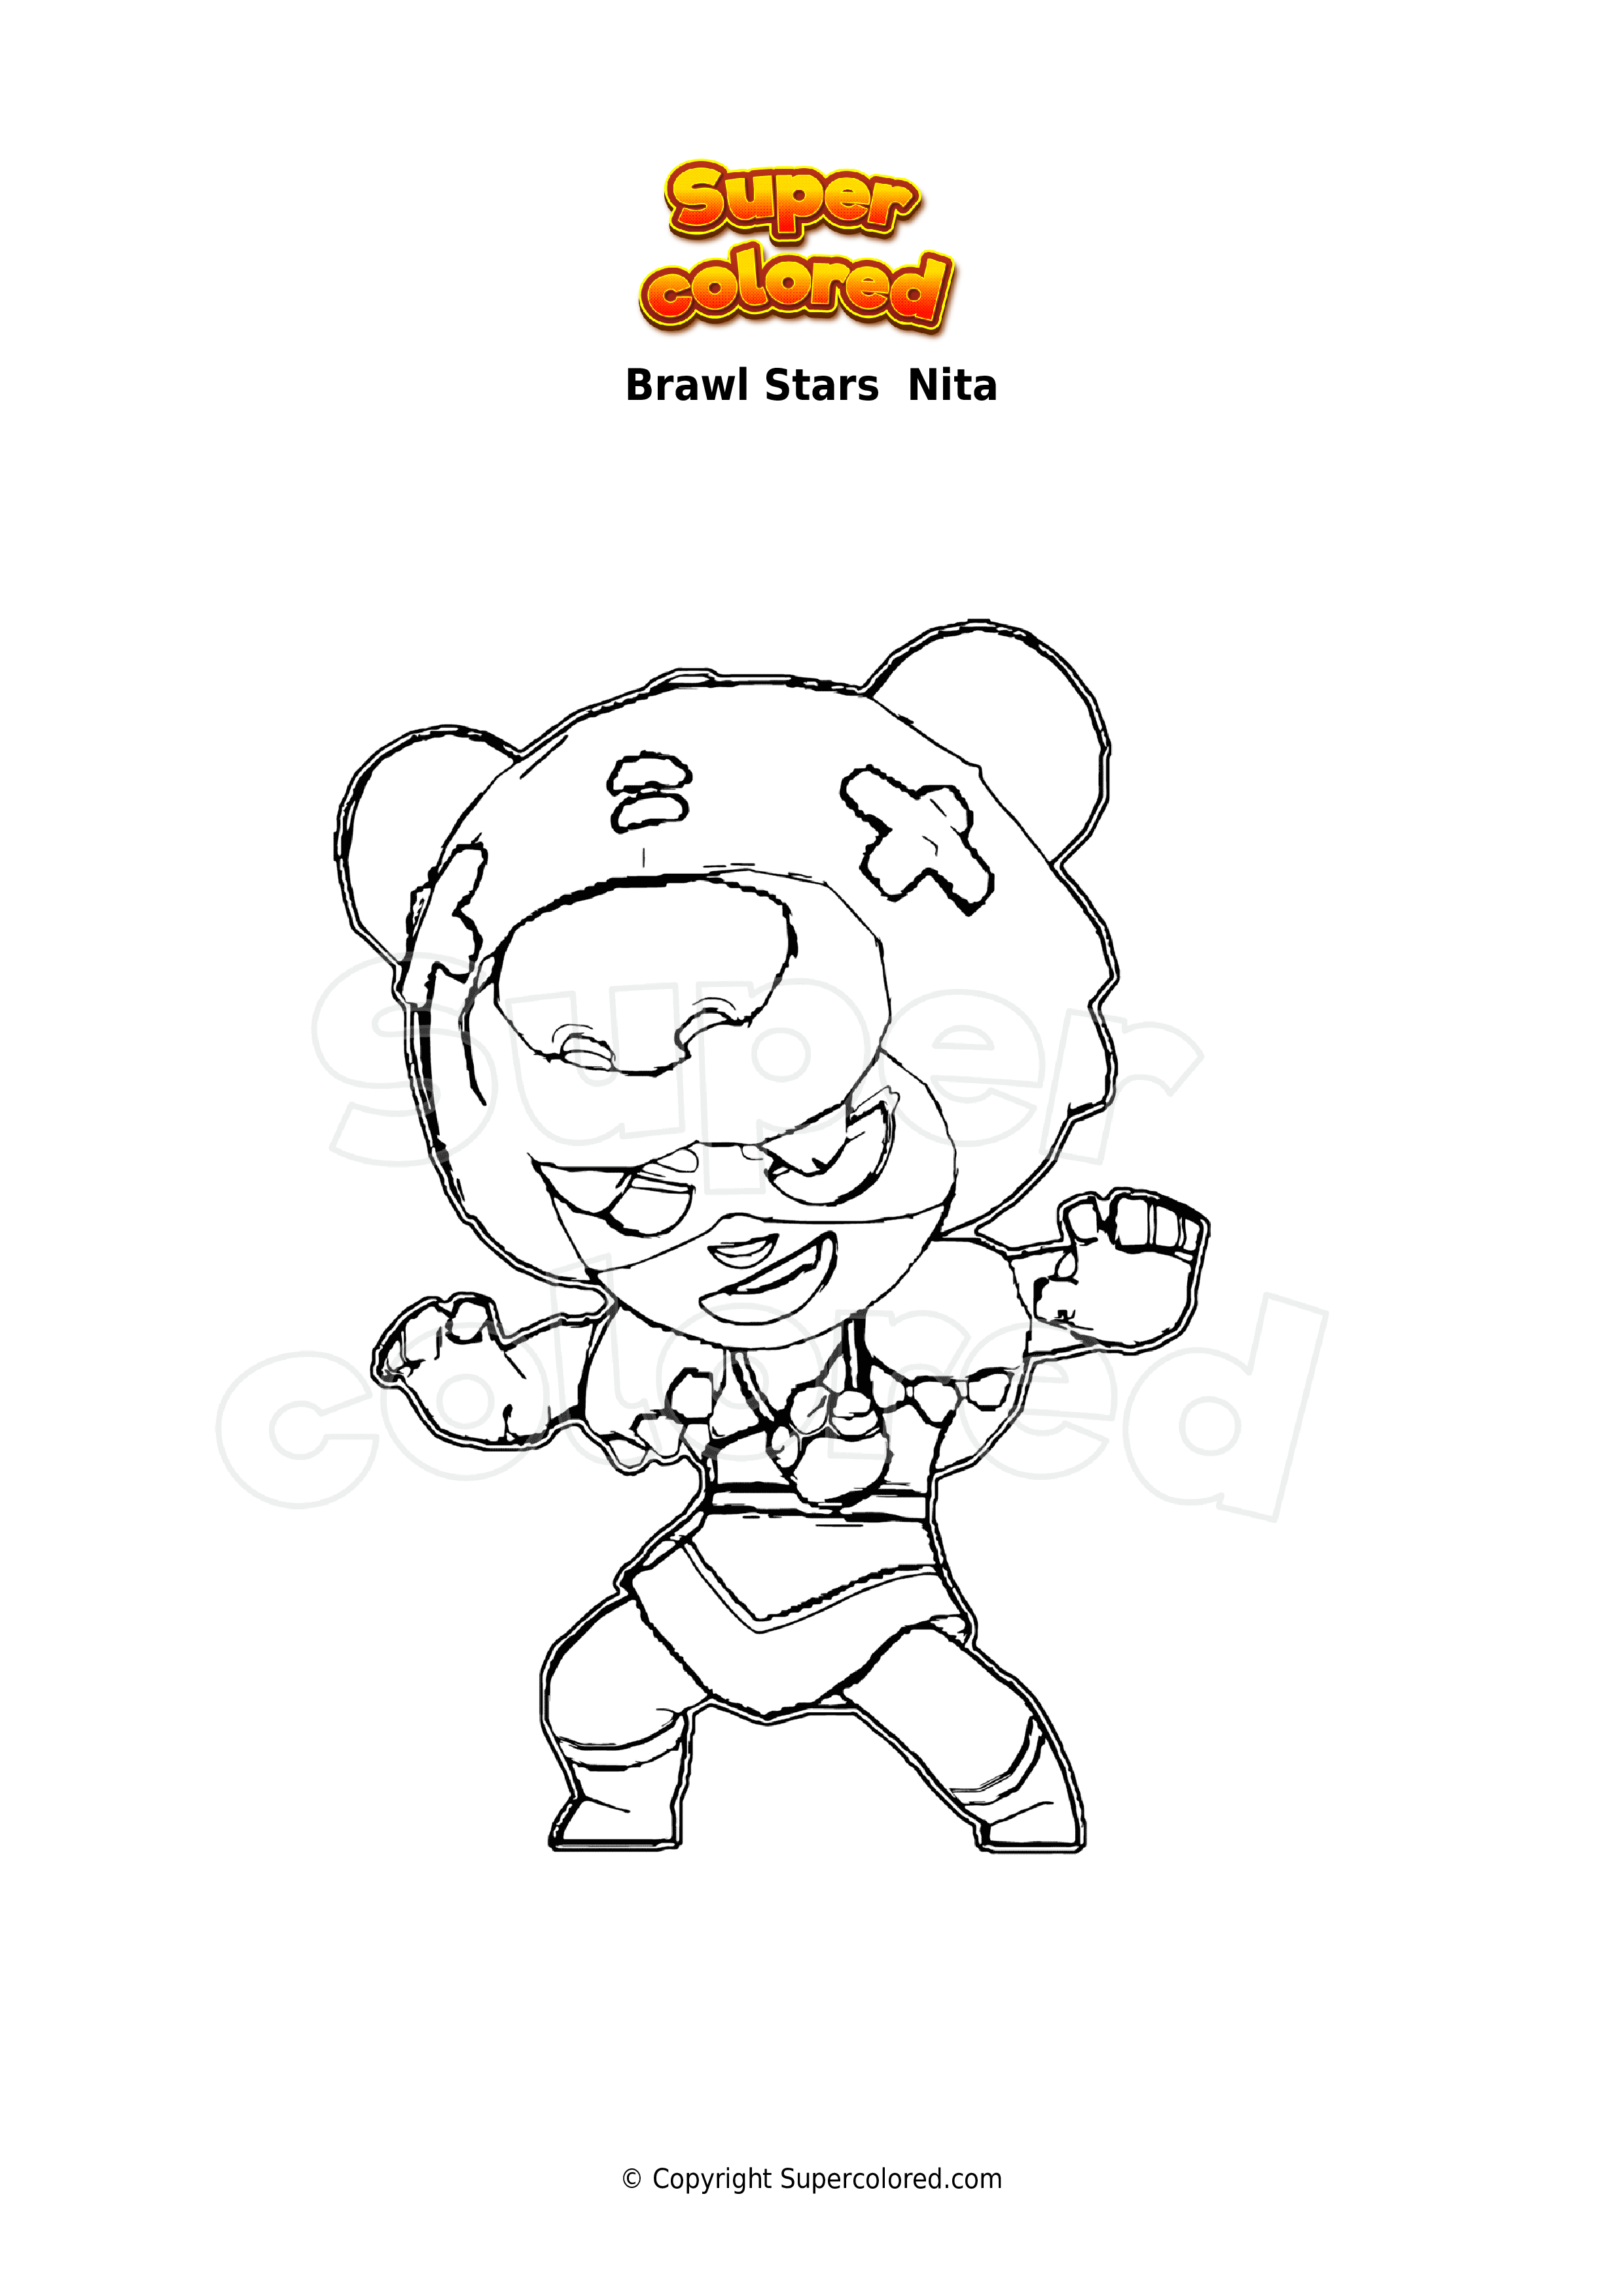 Dibujo Para Colorear Brawl Stars Nita Supercolored Com - dibujos para colorear brawl stars nita